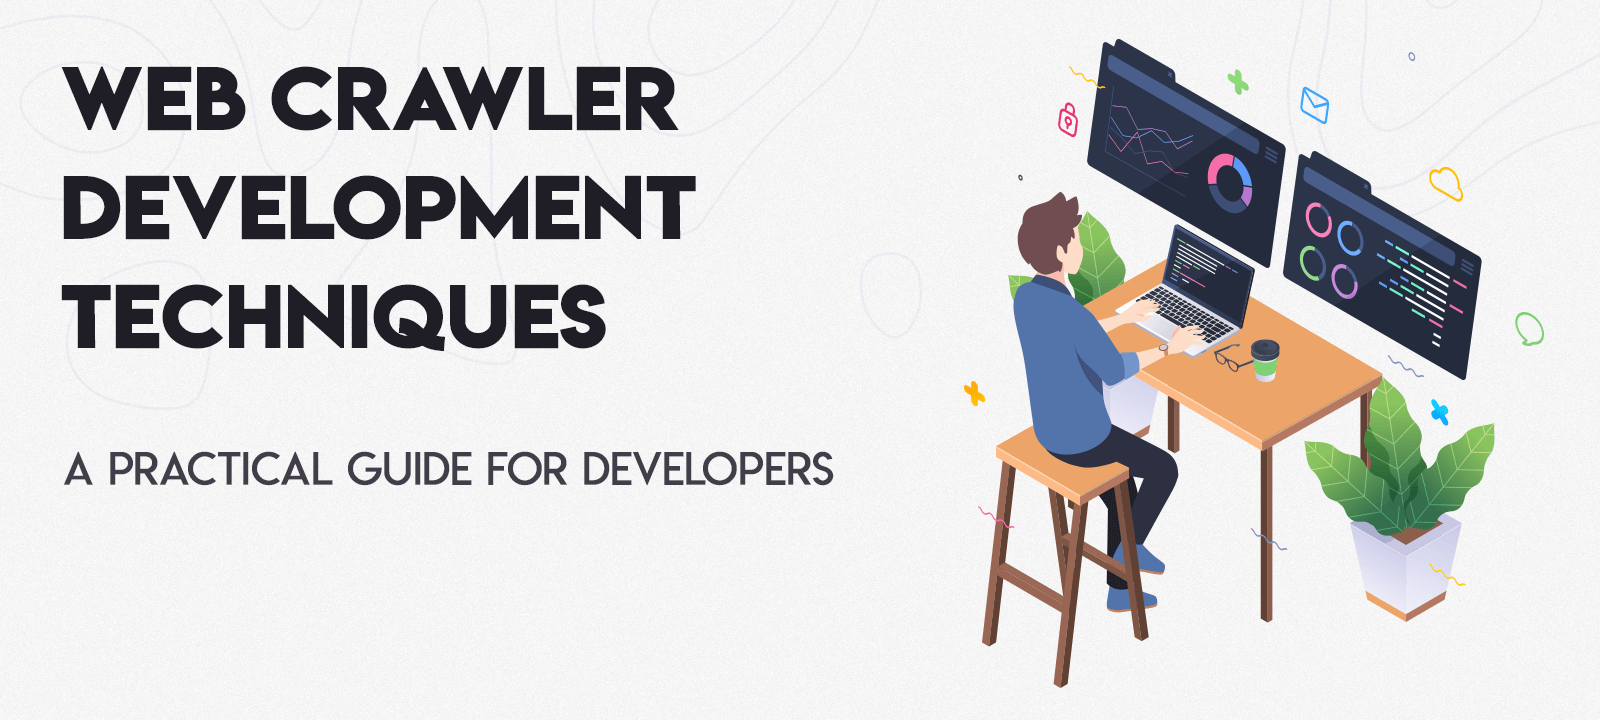 Web Crawler Development Techniques